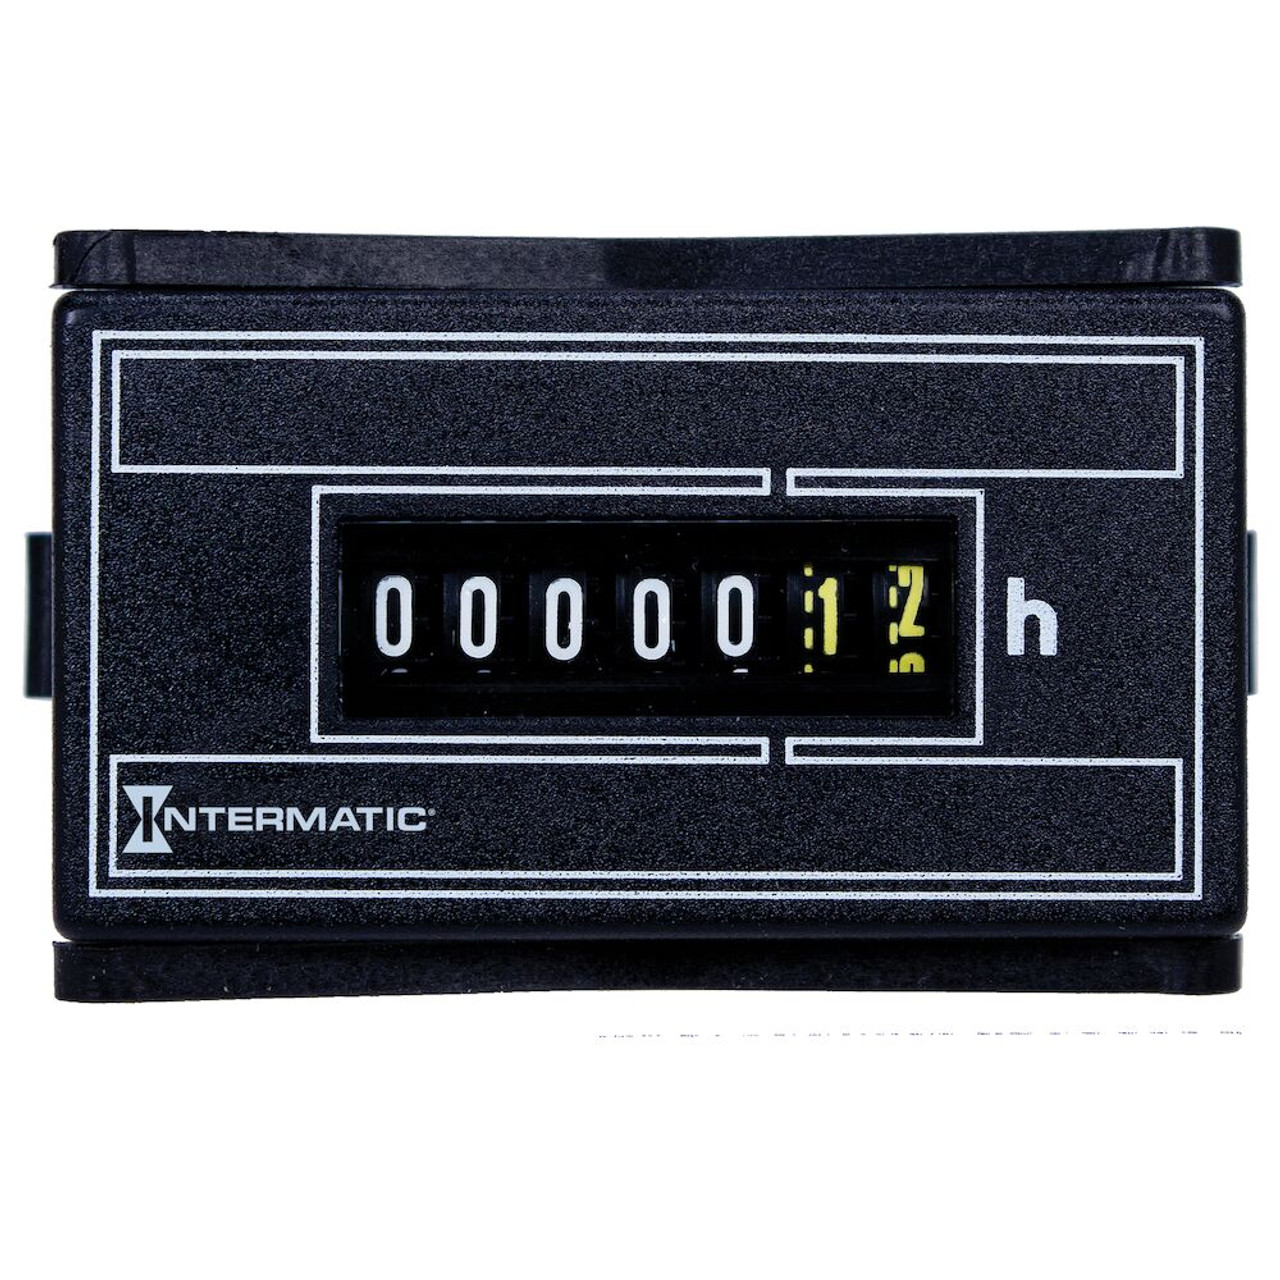 Intermatic FWZ72-120U Counters Meters